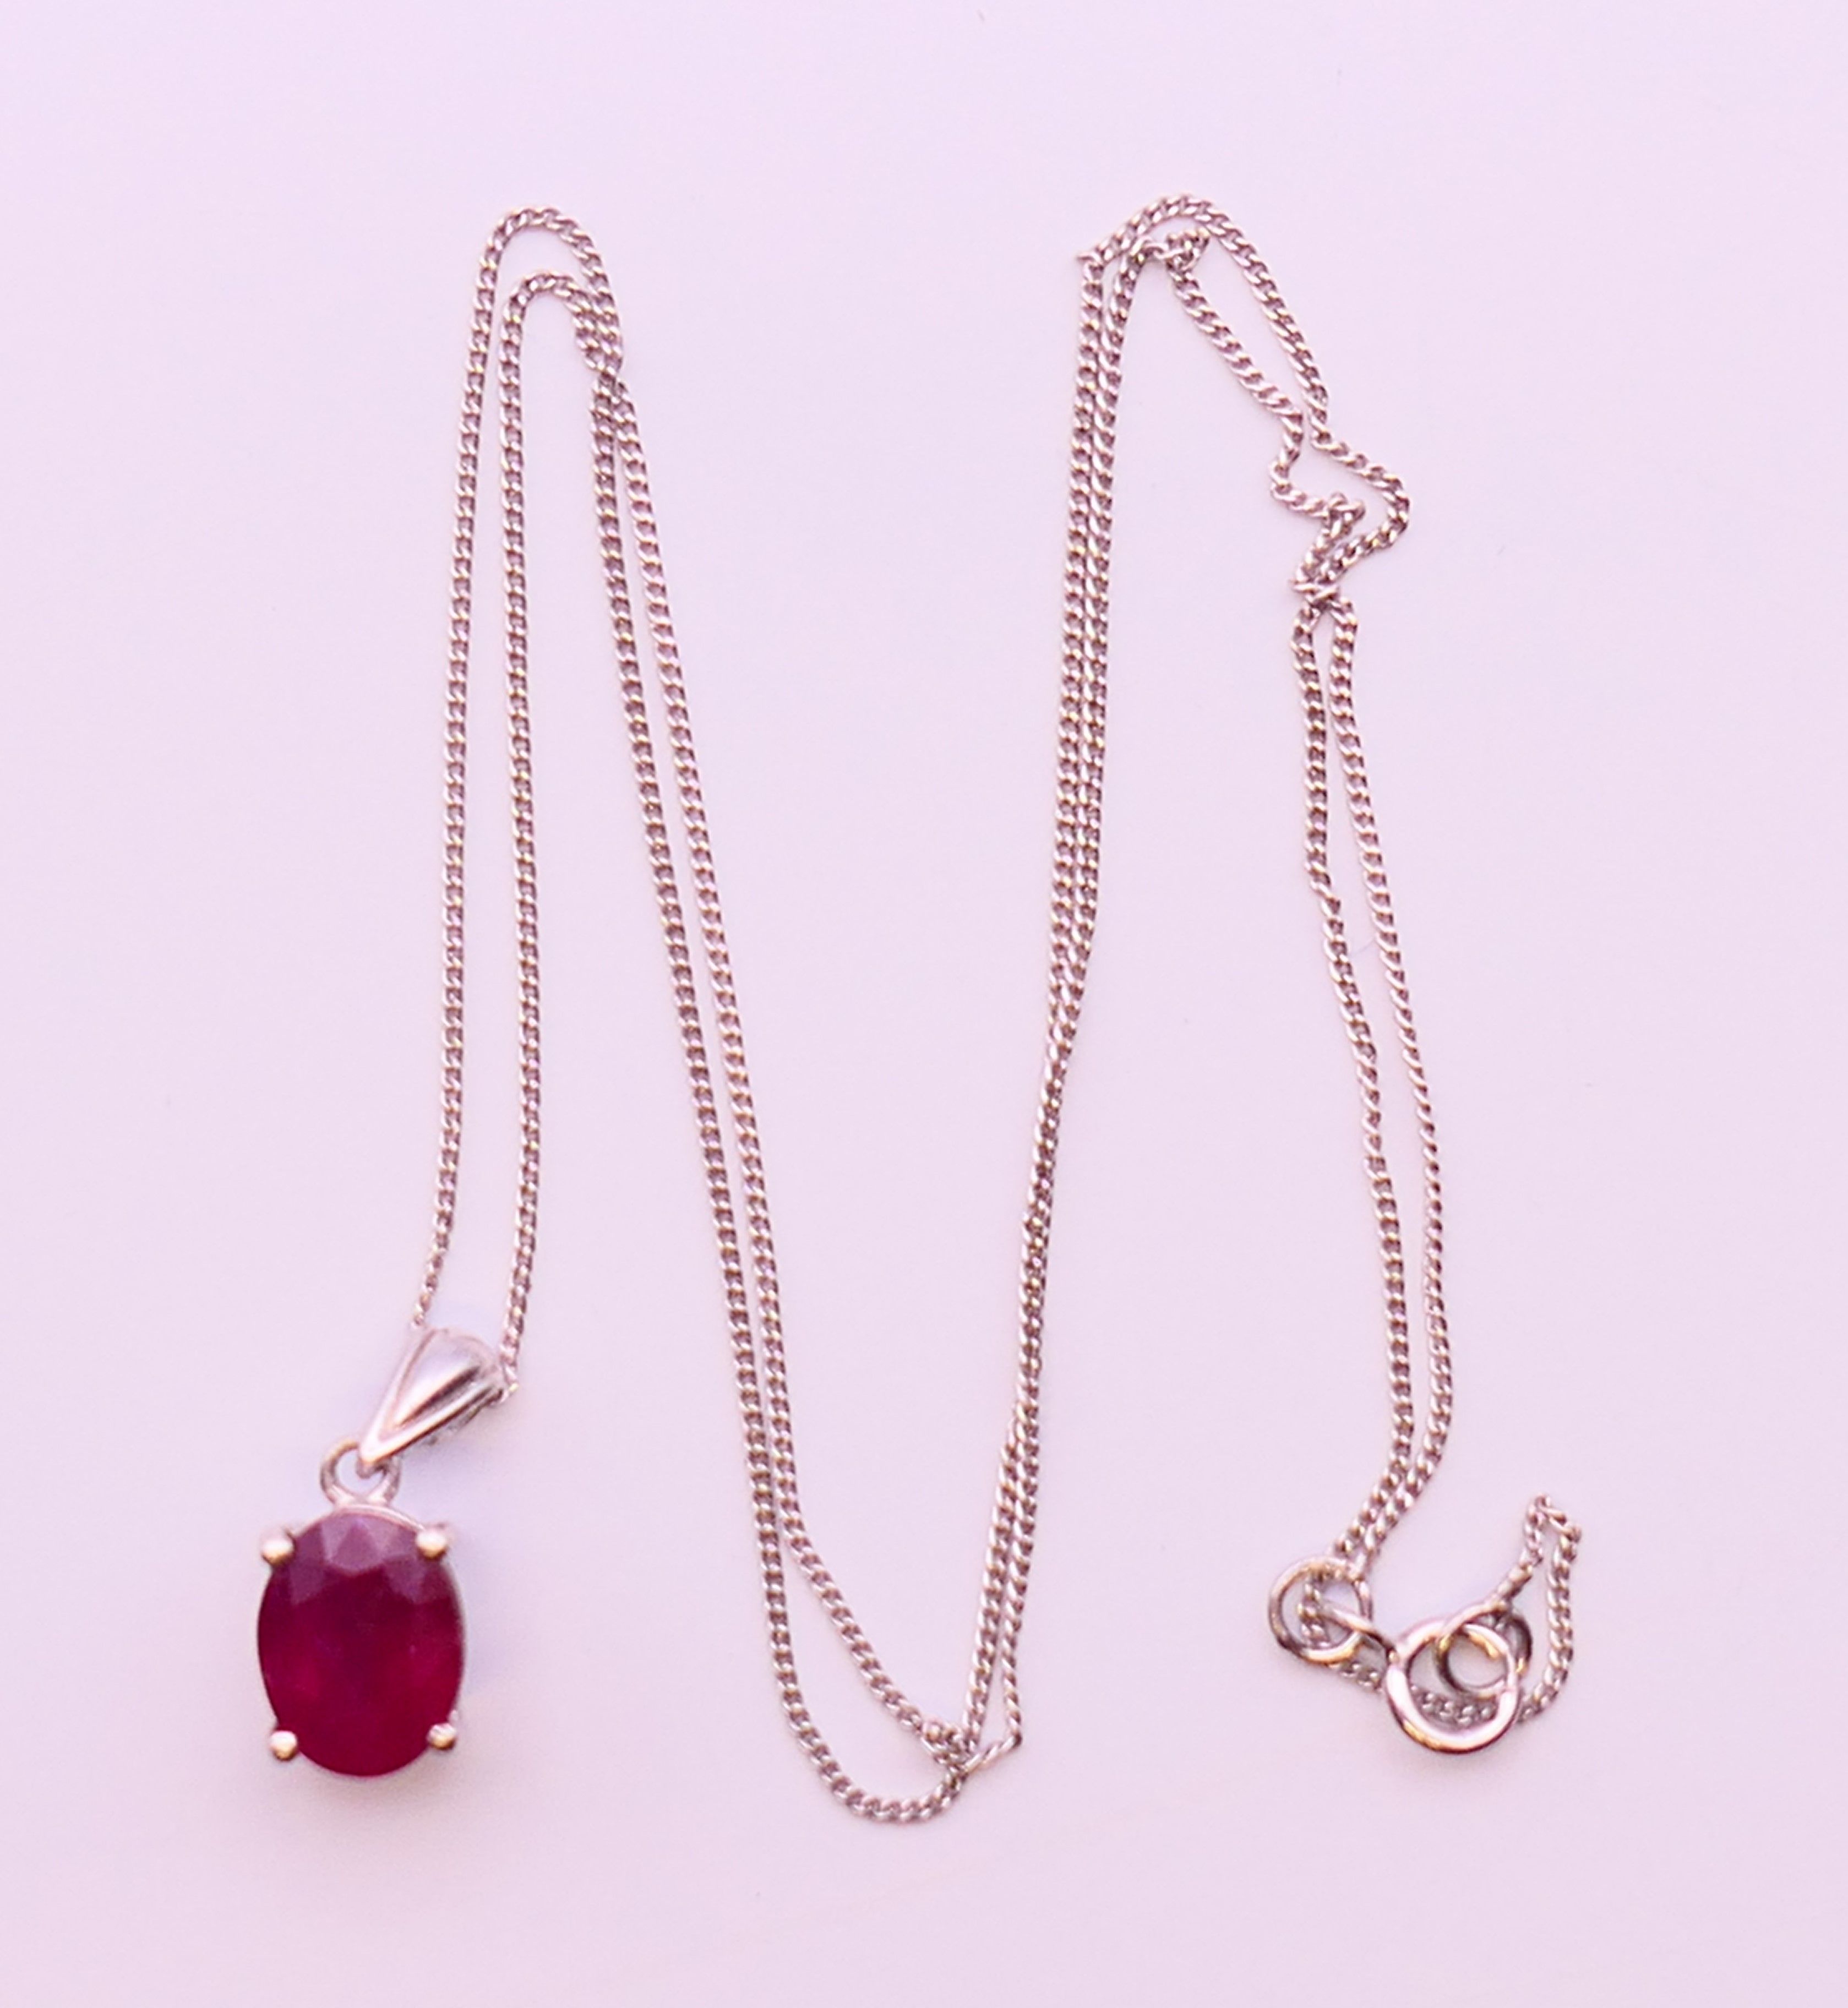 A silver ruby pendant on chain. Pendant 0.75 cm high, chain 45 cm long.